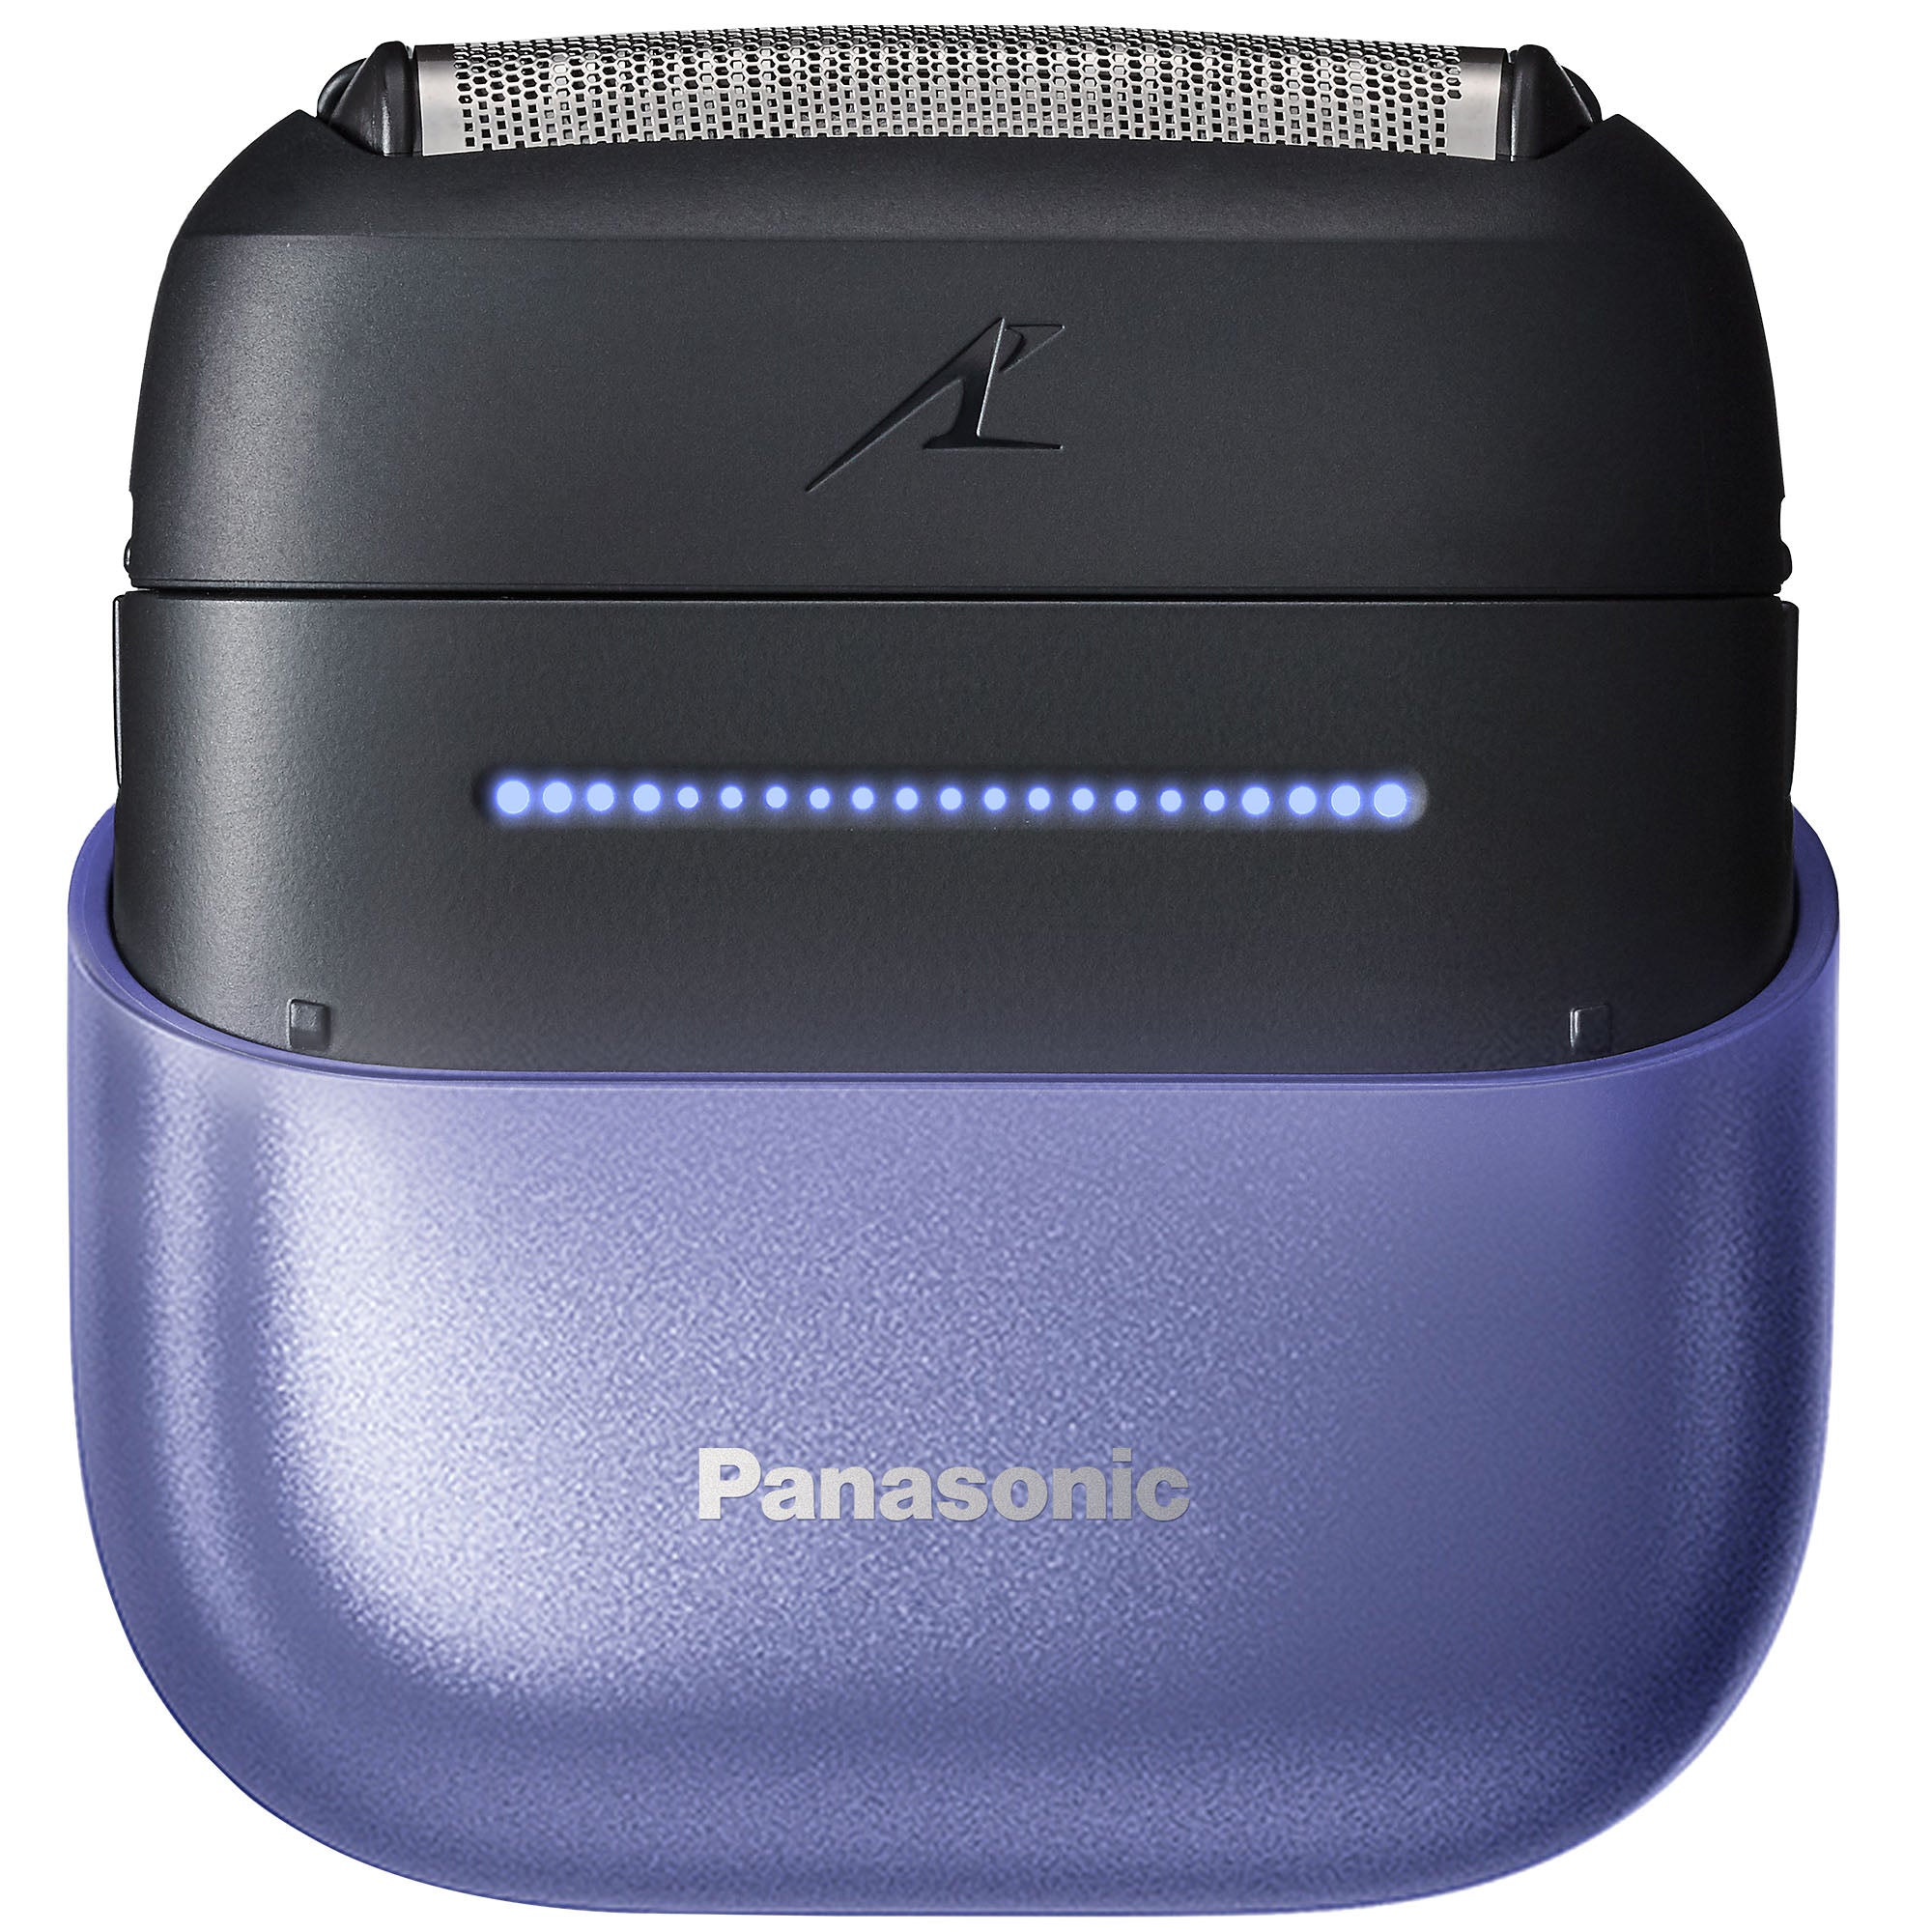 Panasonic Travel Shaver for Men and Women